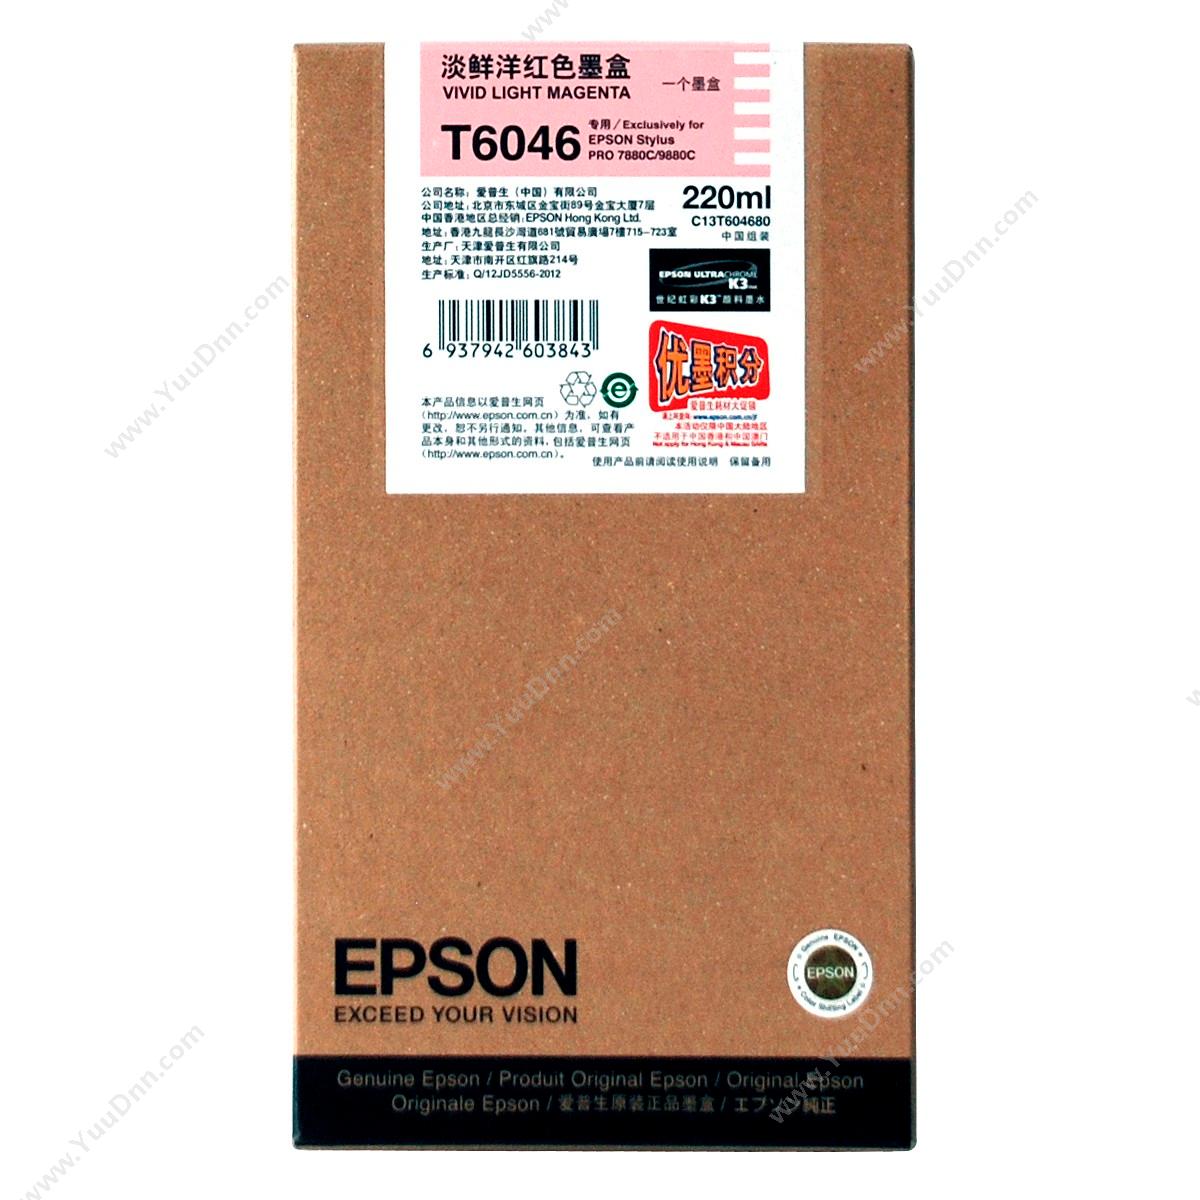 爱普生 Epson 7880/9880VIVID浅红墨（C13T604680） 墨盒